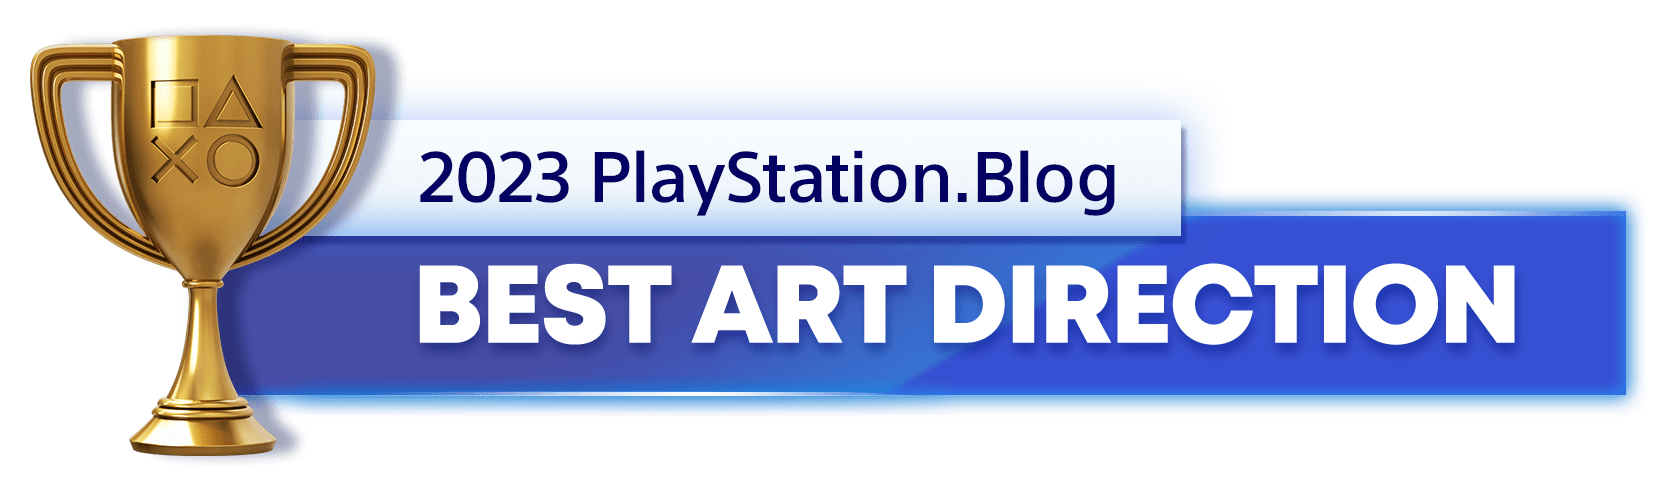 Gold Trophy for the 2023 PlayStation Blog Best Art Direction Winner